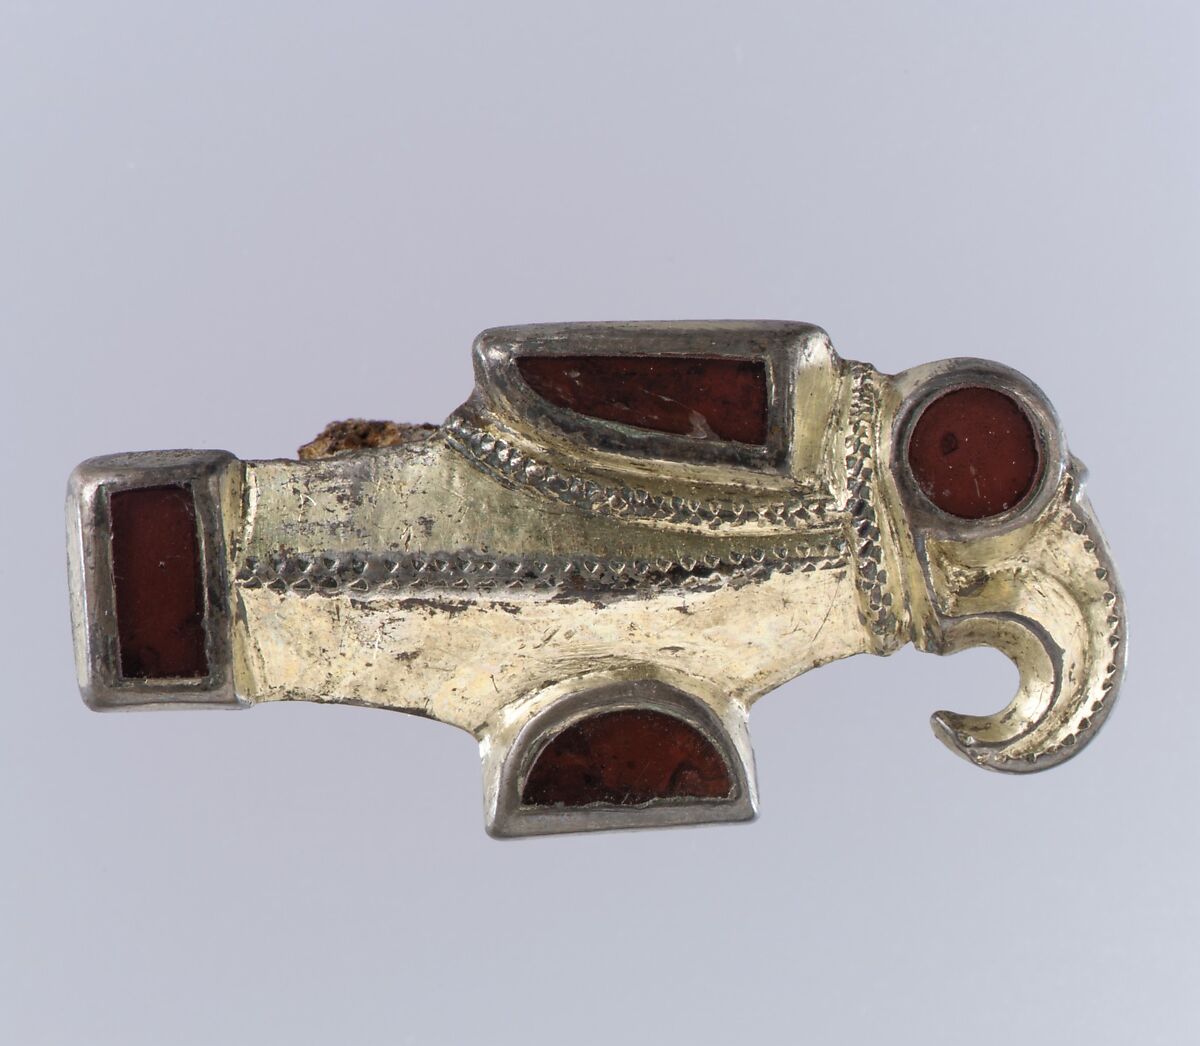 Bird-Shaped Brooch, Silver-gilt, garnets, foil backings for garnets; iron spring, Frankish 